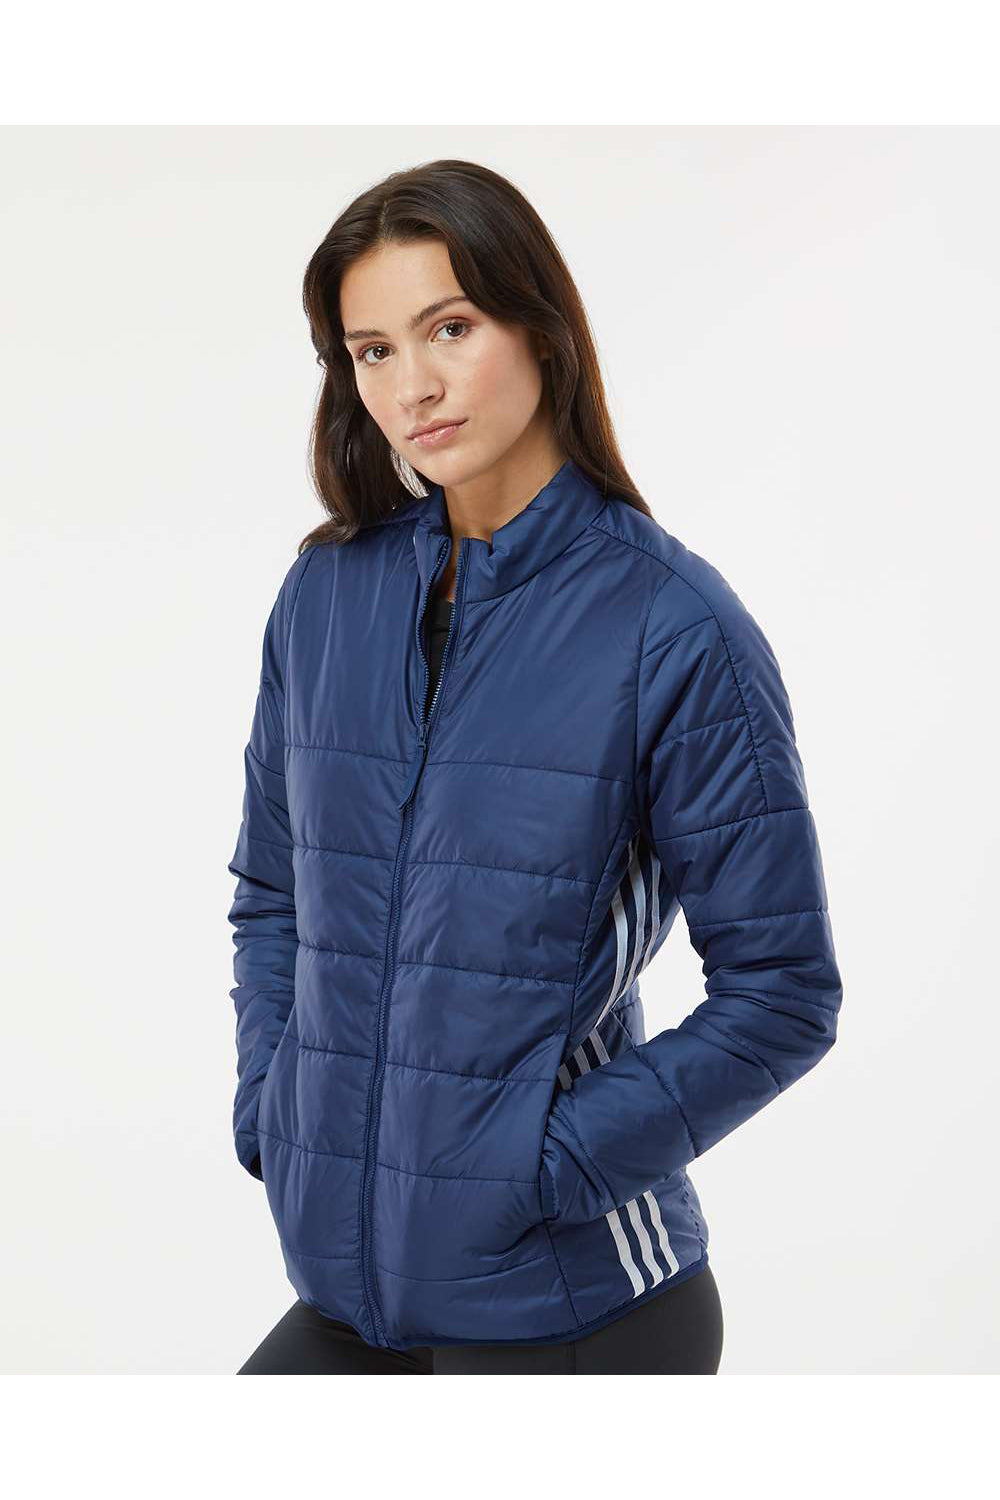 Adidas A571 Womens Full Zip Puffer Jacket Team Navy Blue Model Side